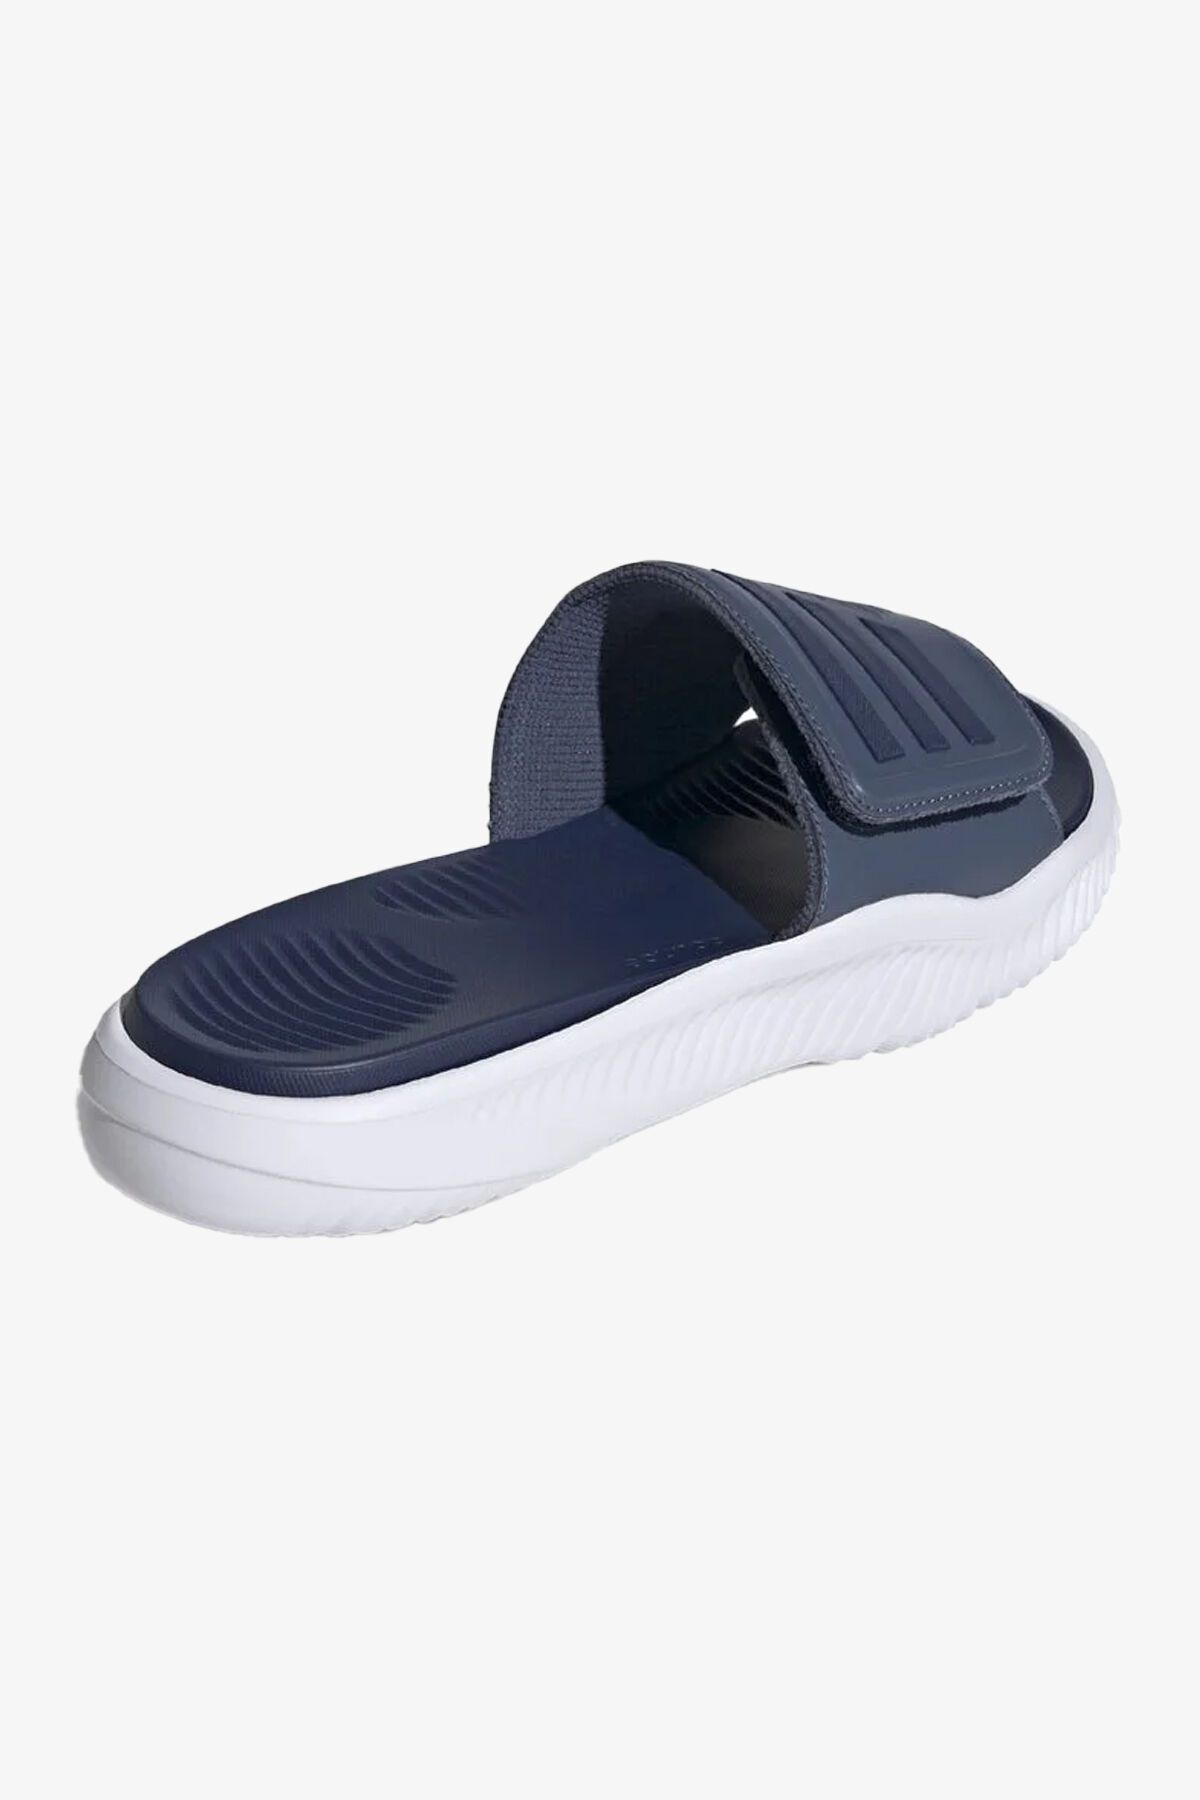 adidas Alphabounce Slide 2 Slipper خاکستری یونیکس IF0814